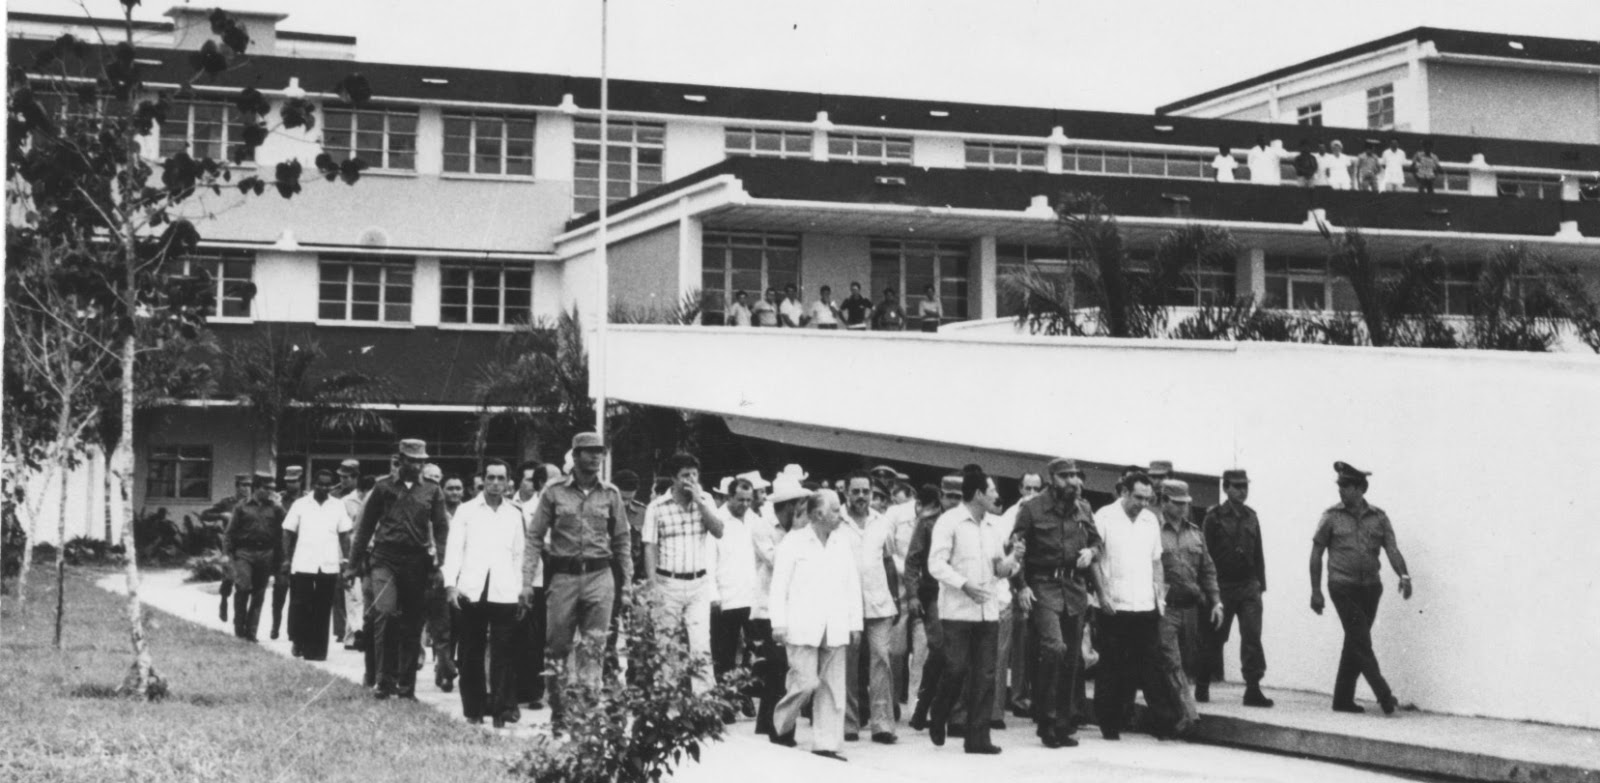 POR SI HACE FALTA Fidel Hospital Guevara 17 6 806